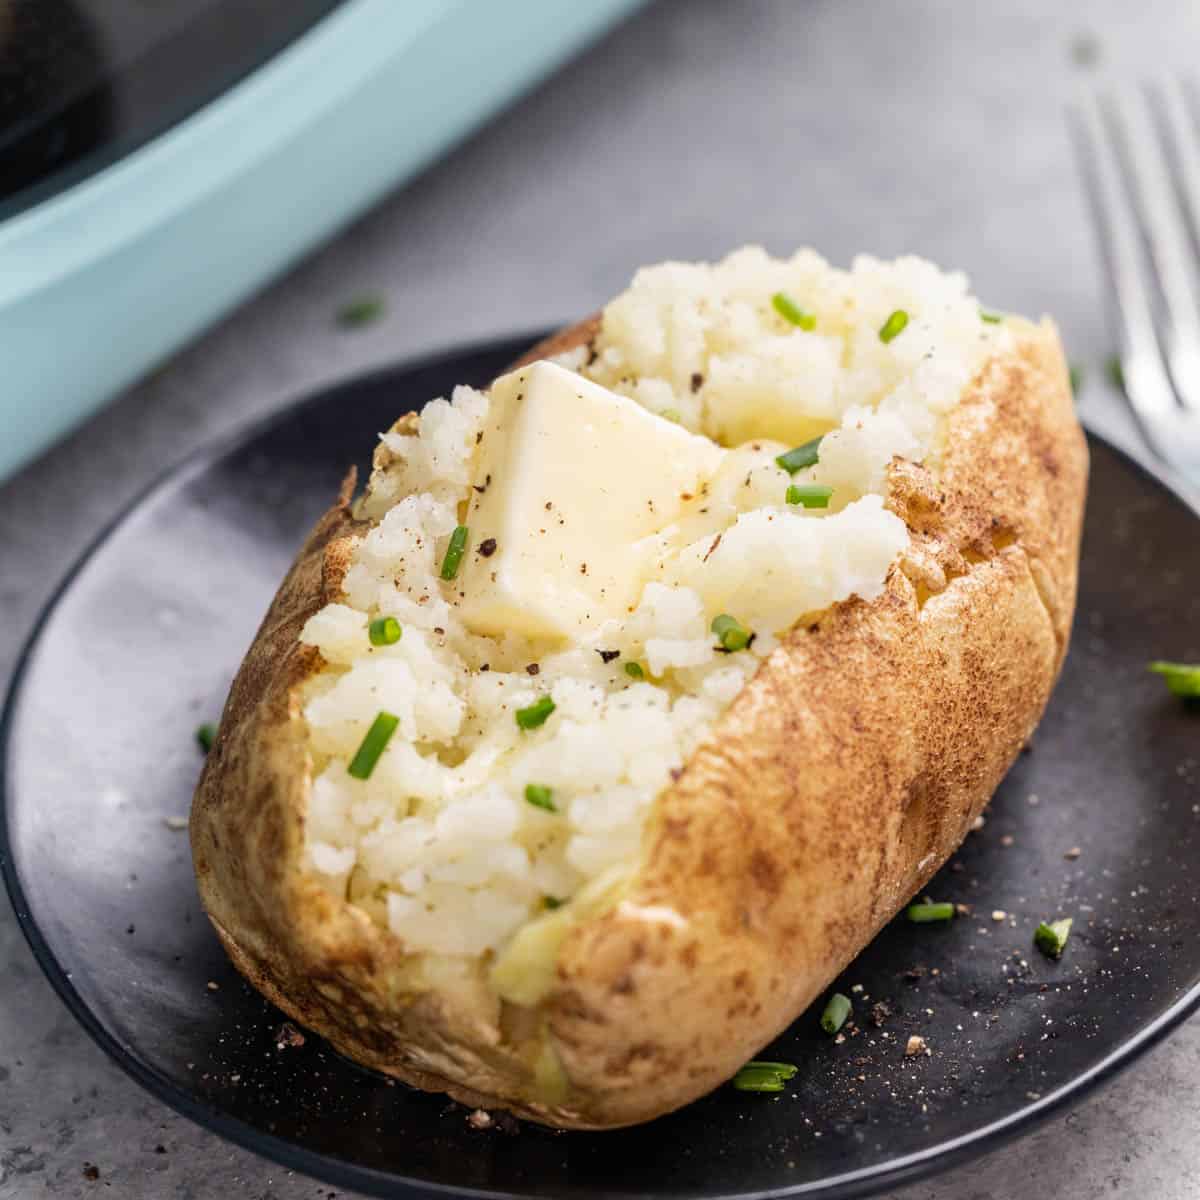 Microwave baked potato.